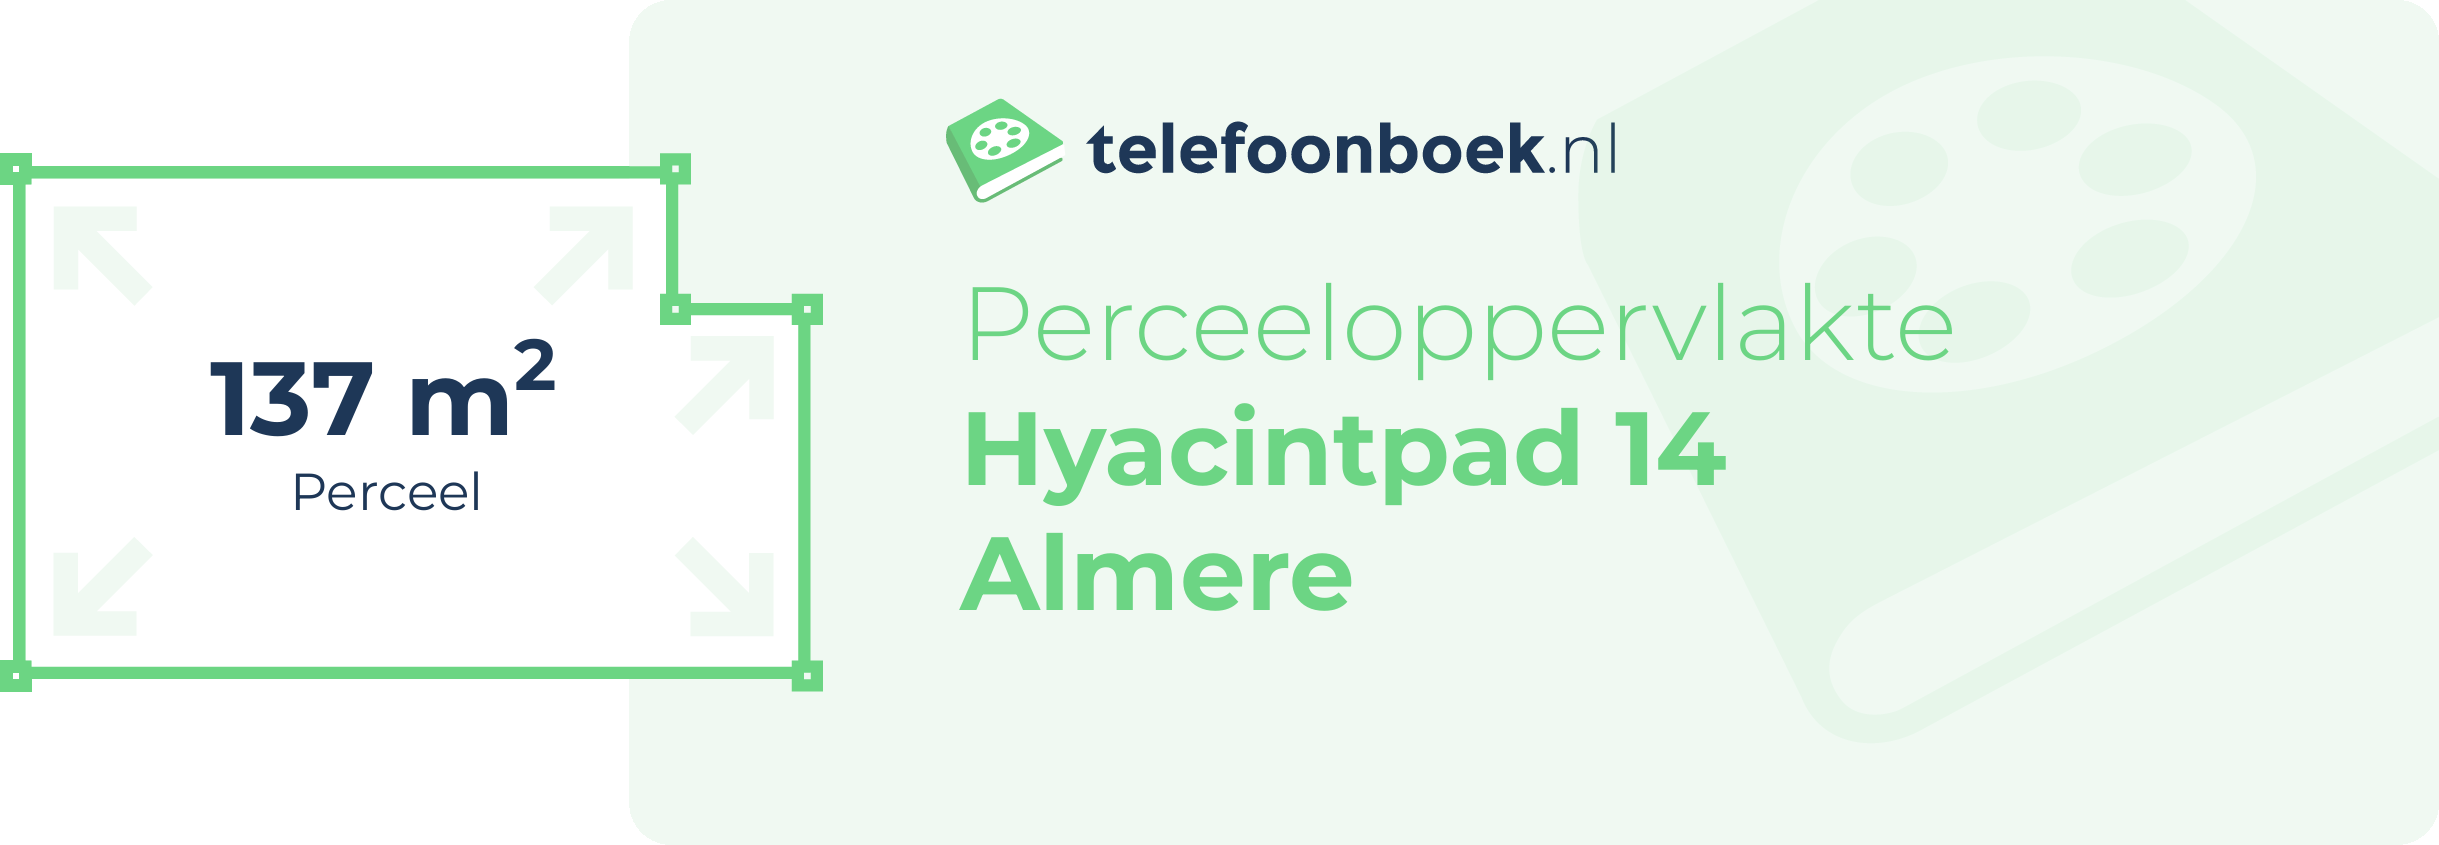 Perceeloppervlakte Hyacintpad 14 Almere